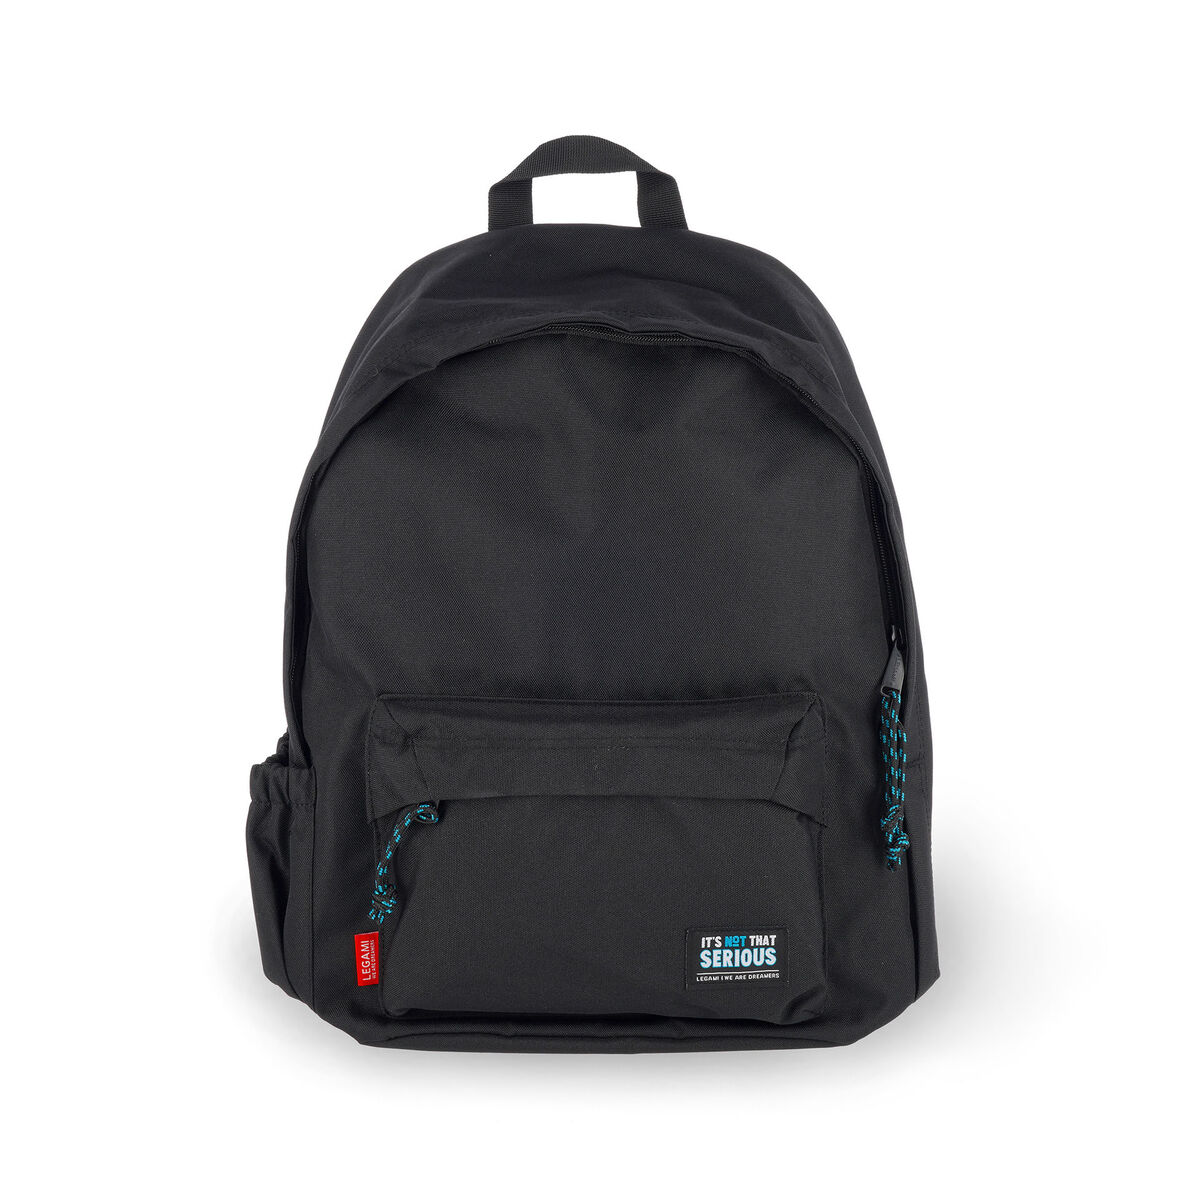 Rucksack - My Backpack BLACK | Legami.com